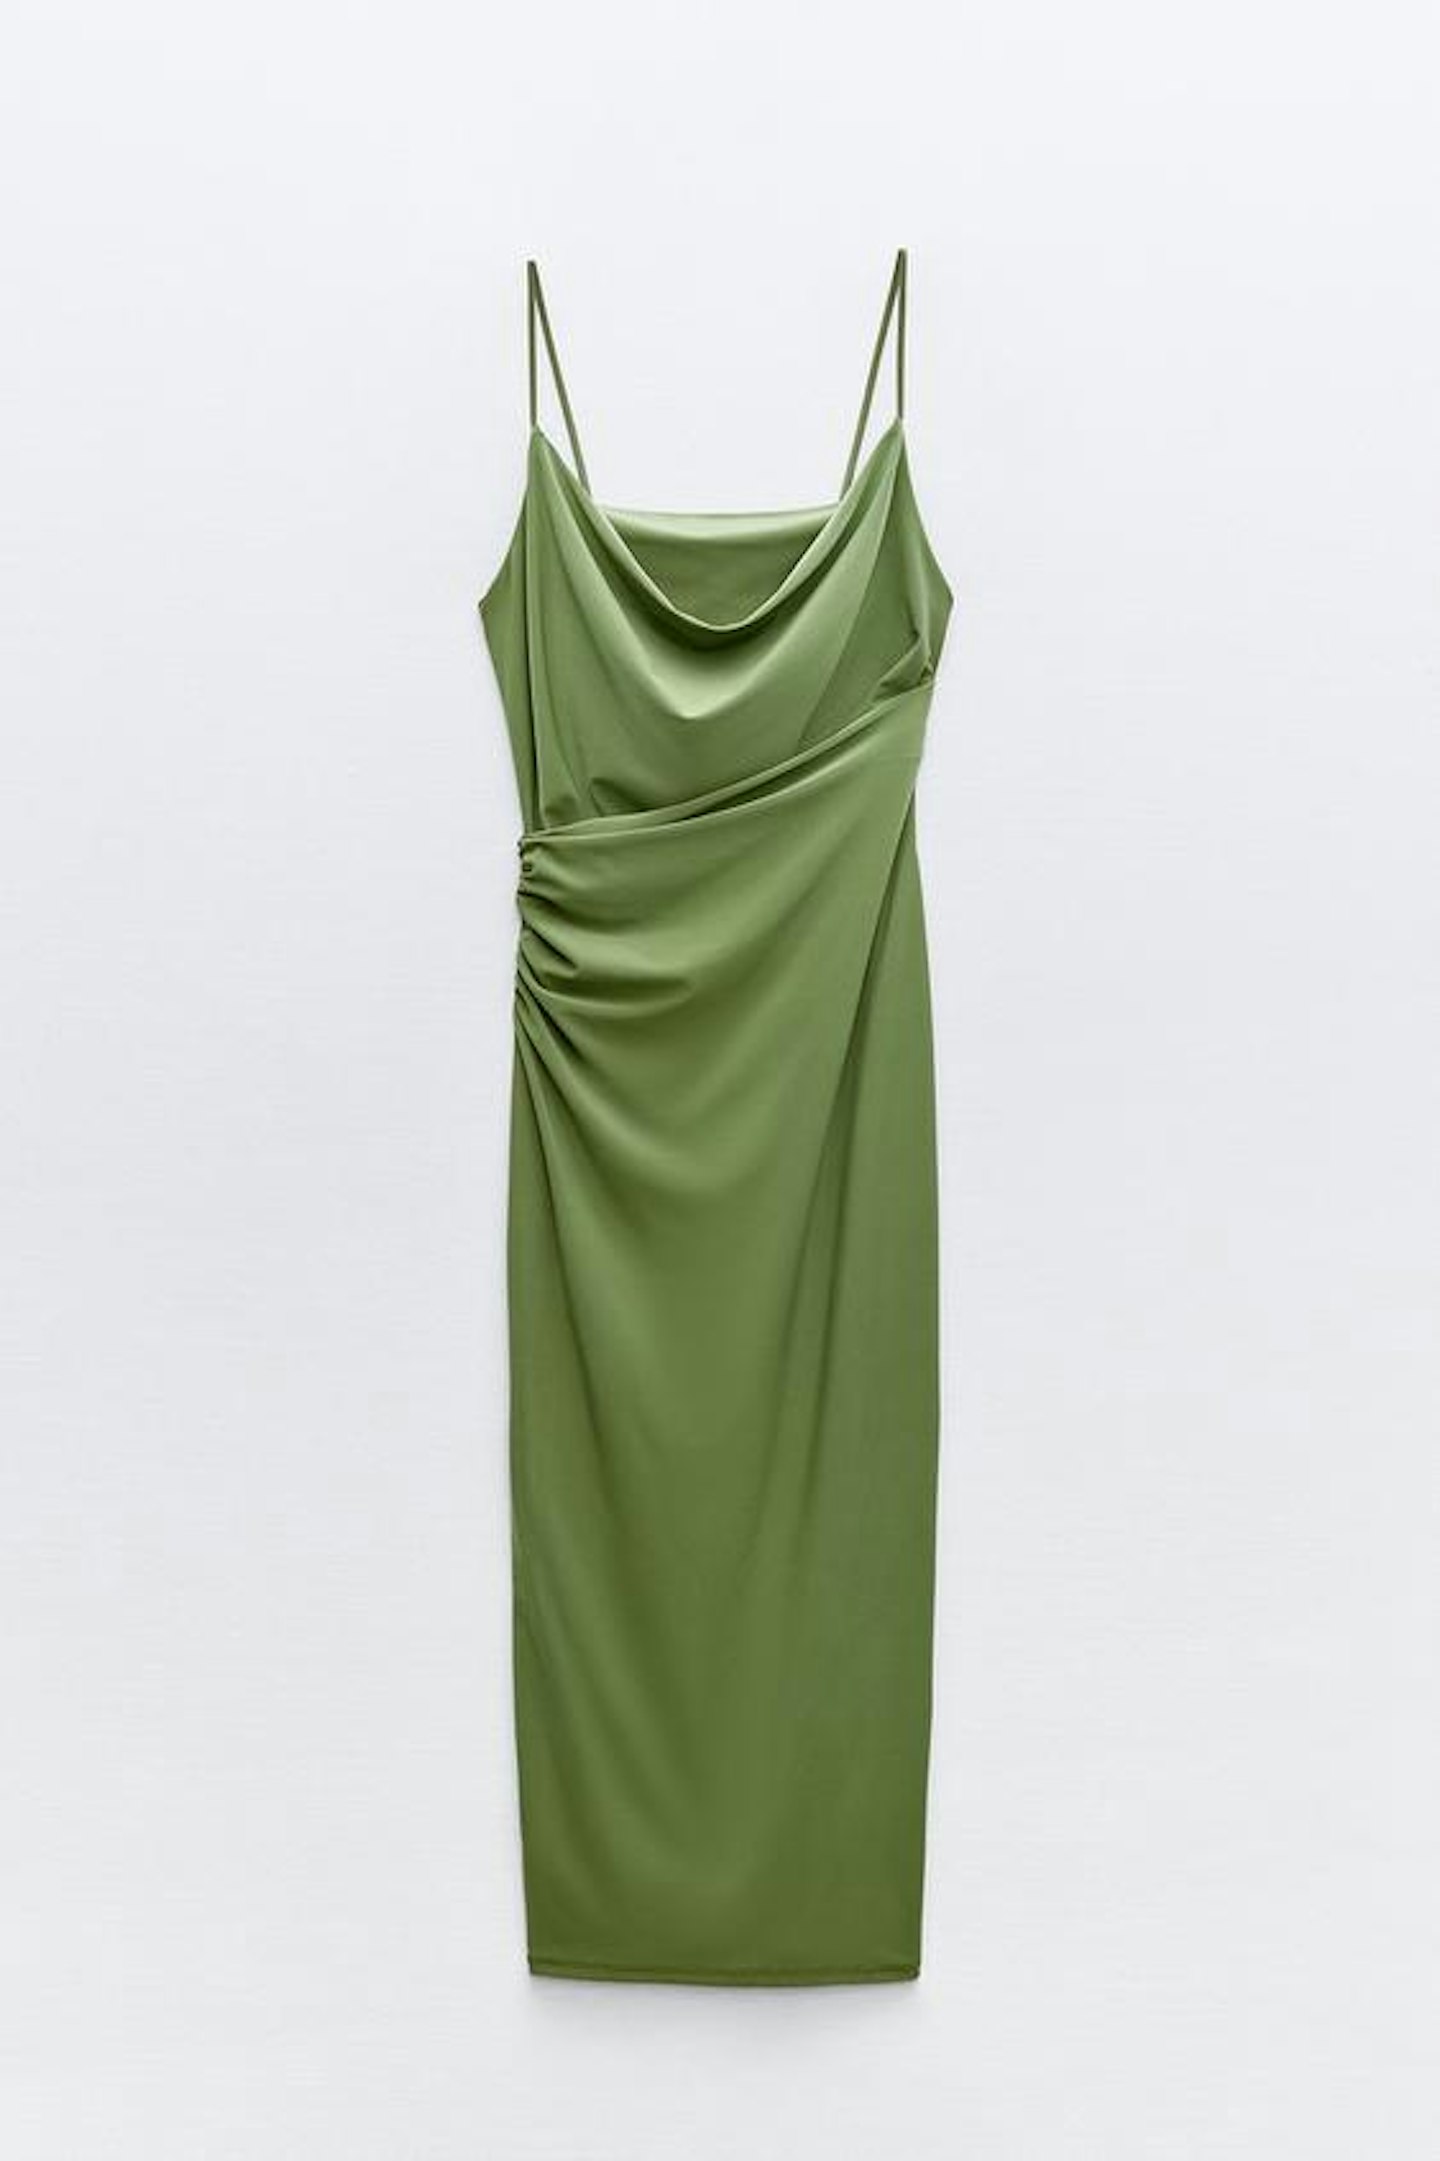 Zara, Flowing Crepe Dress